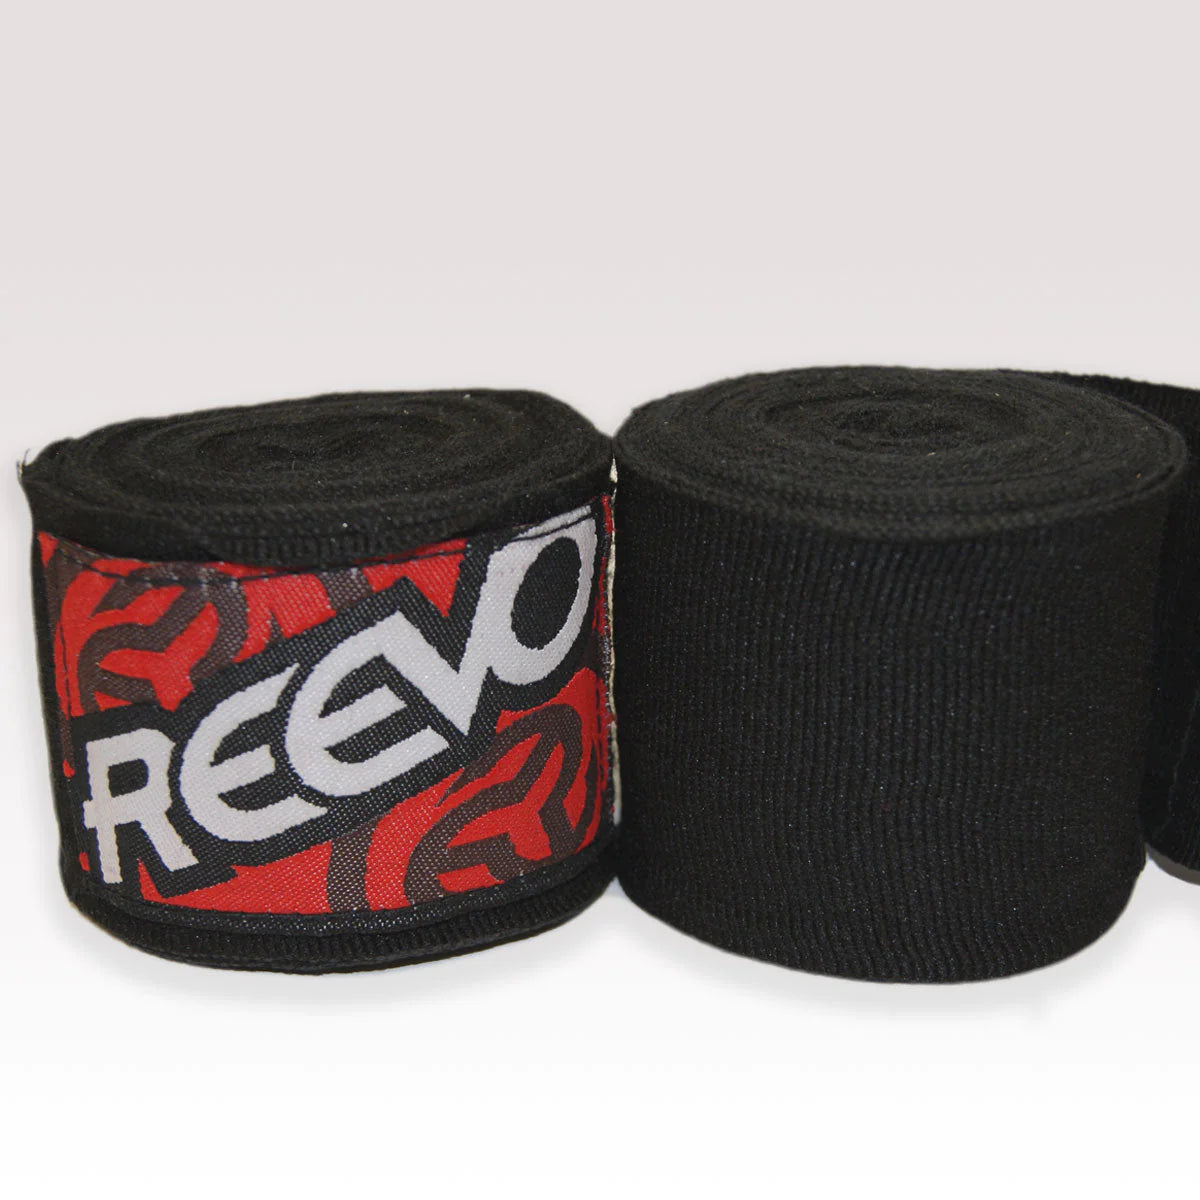 Custom Reevo Handwraps